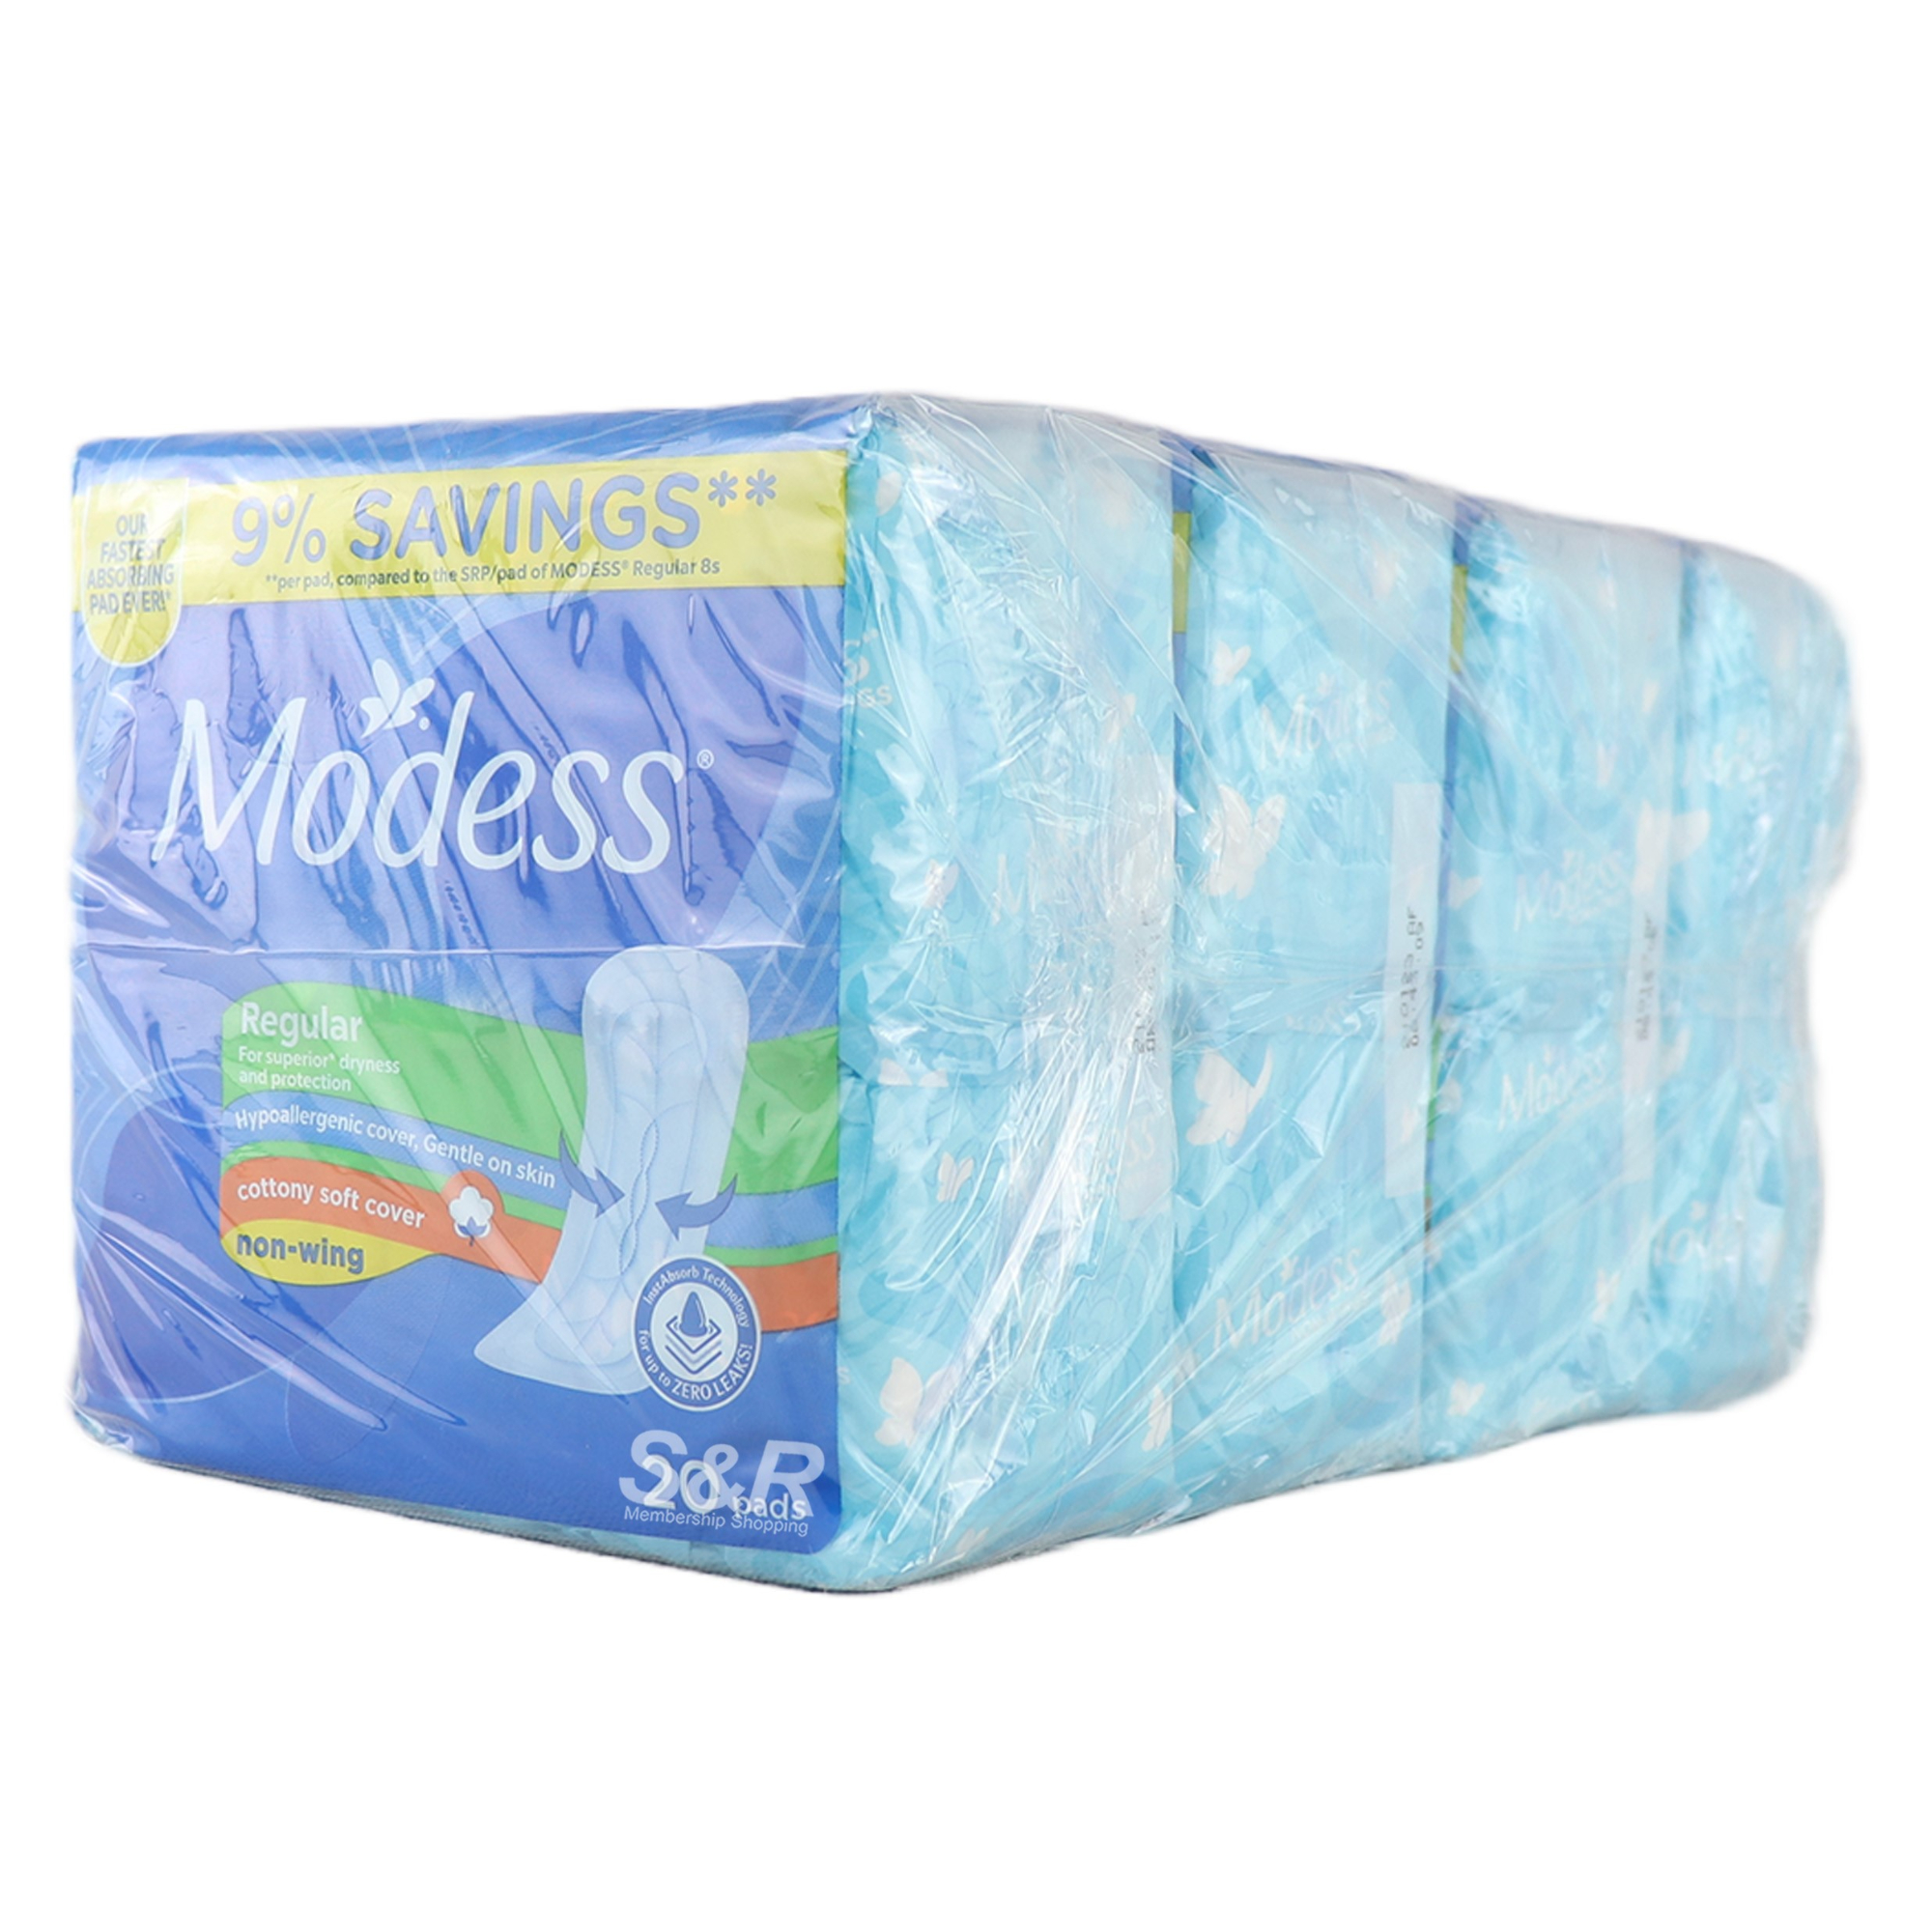 Modess Cottony Soft Regular Sanitary Napkins (20 pads x 4pcs)